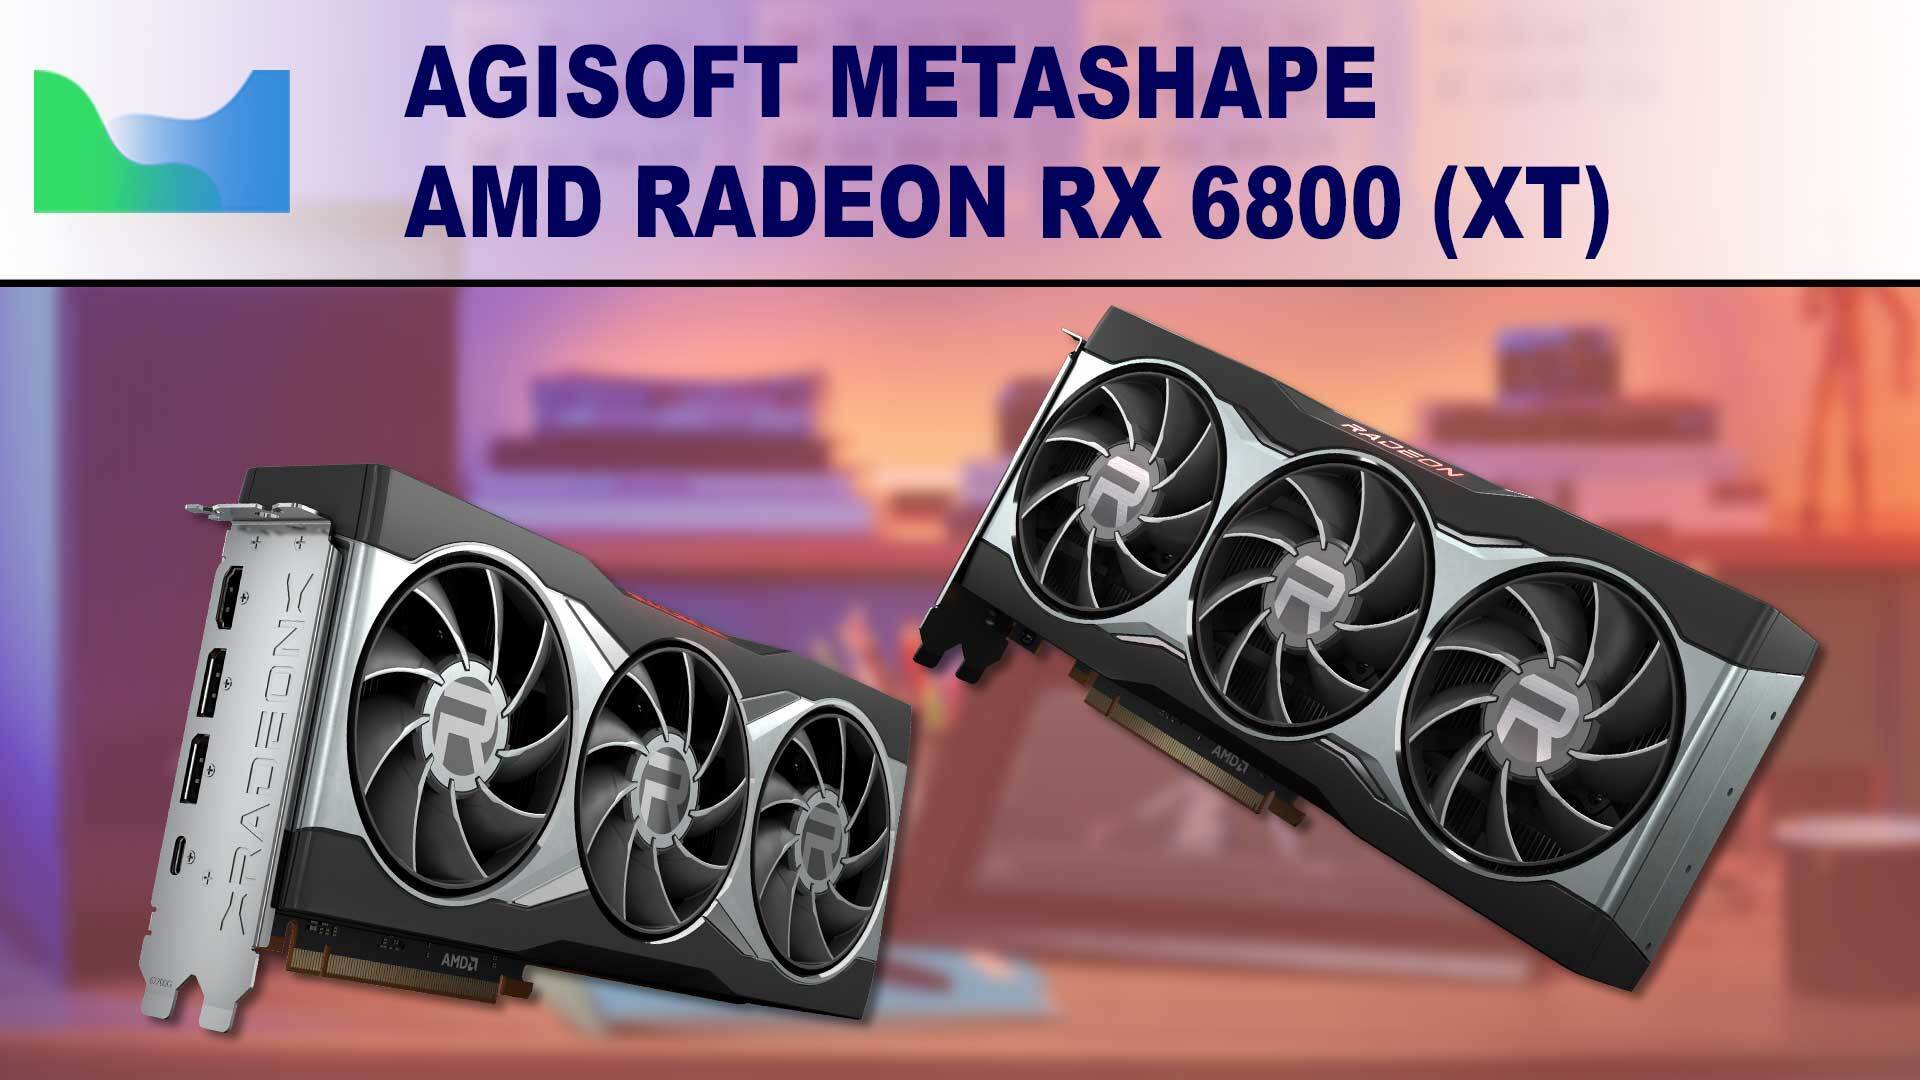 Agisoft Metashape Photogrammetry Performance Review for AMD Radeon RX 6800 & 6800 XT